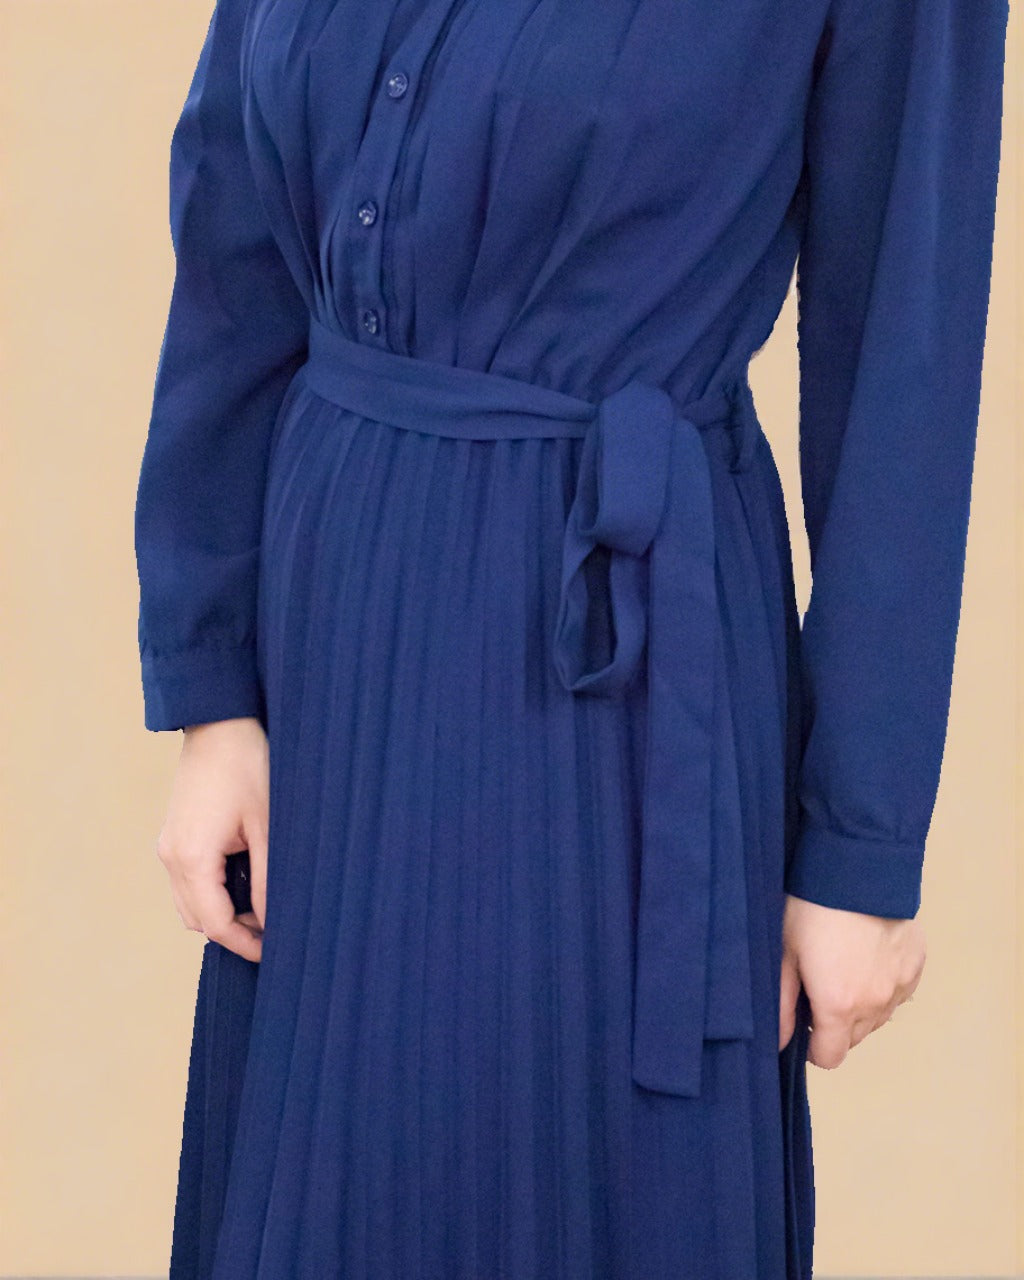 Ania Blue Long Sleeve Dress Casual